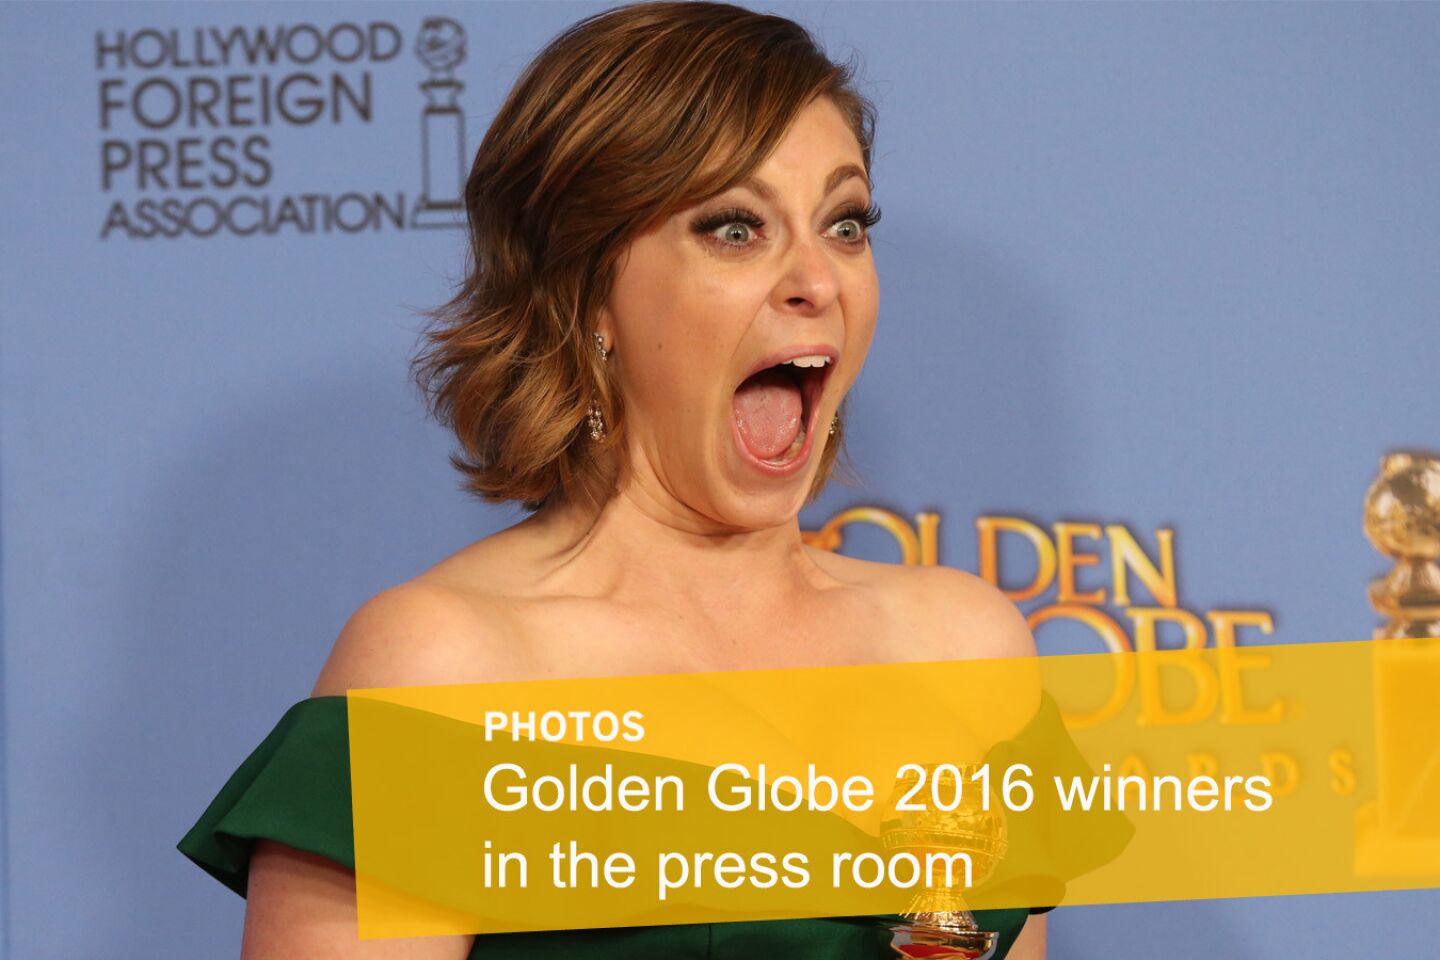 Golden Globe 2016 press room